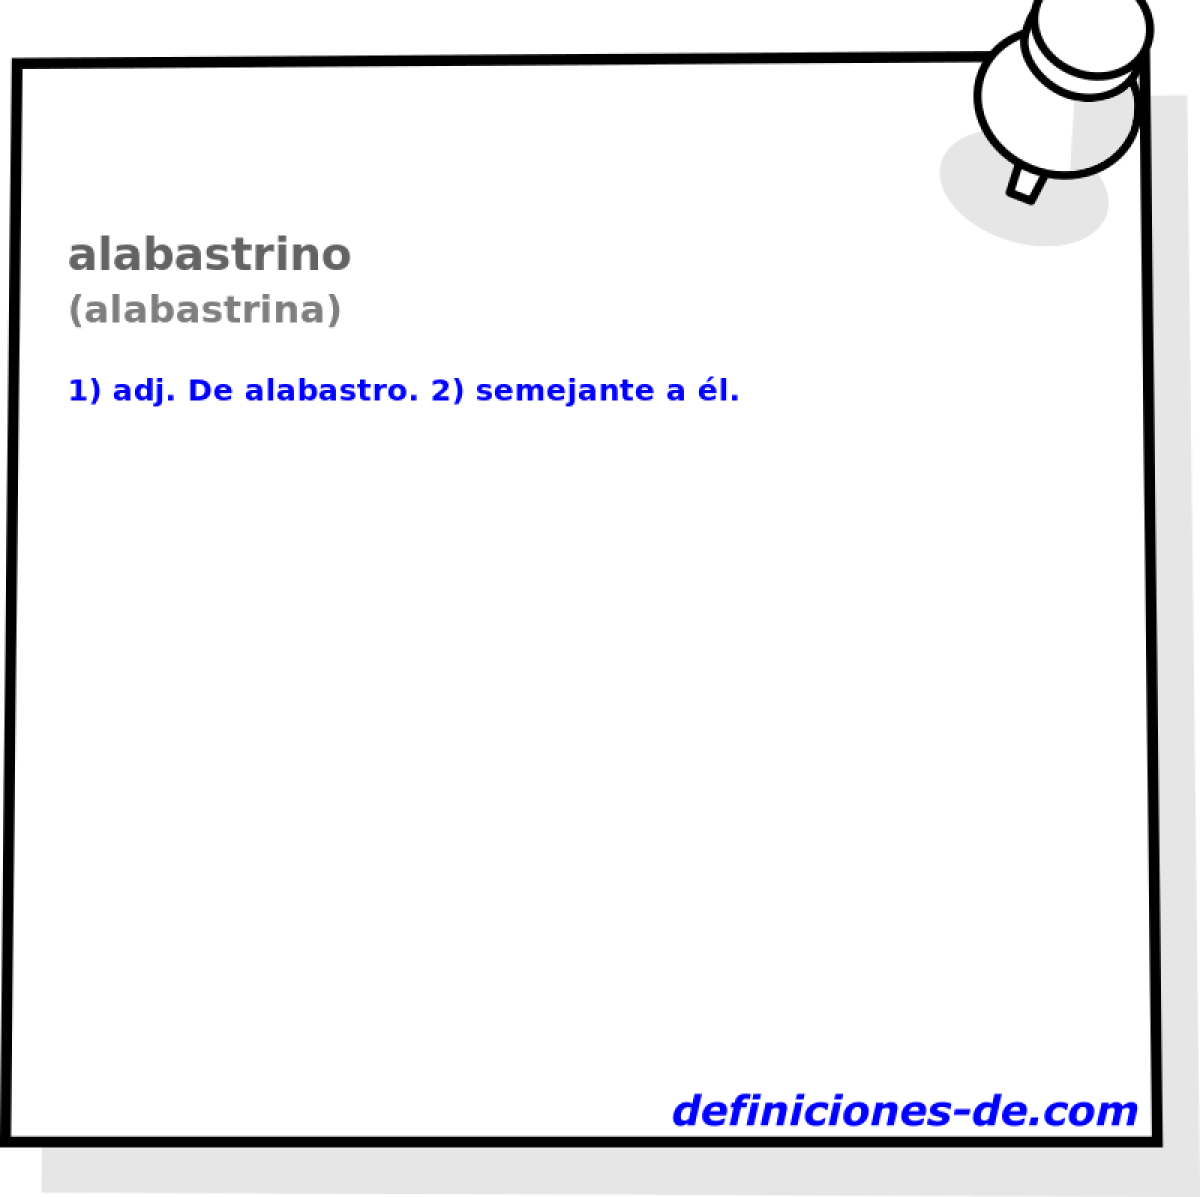 alabastrino (alabastrina)